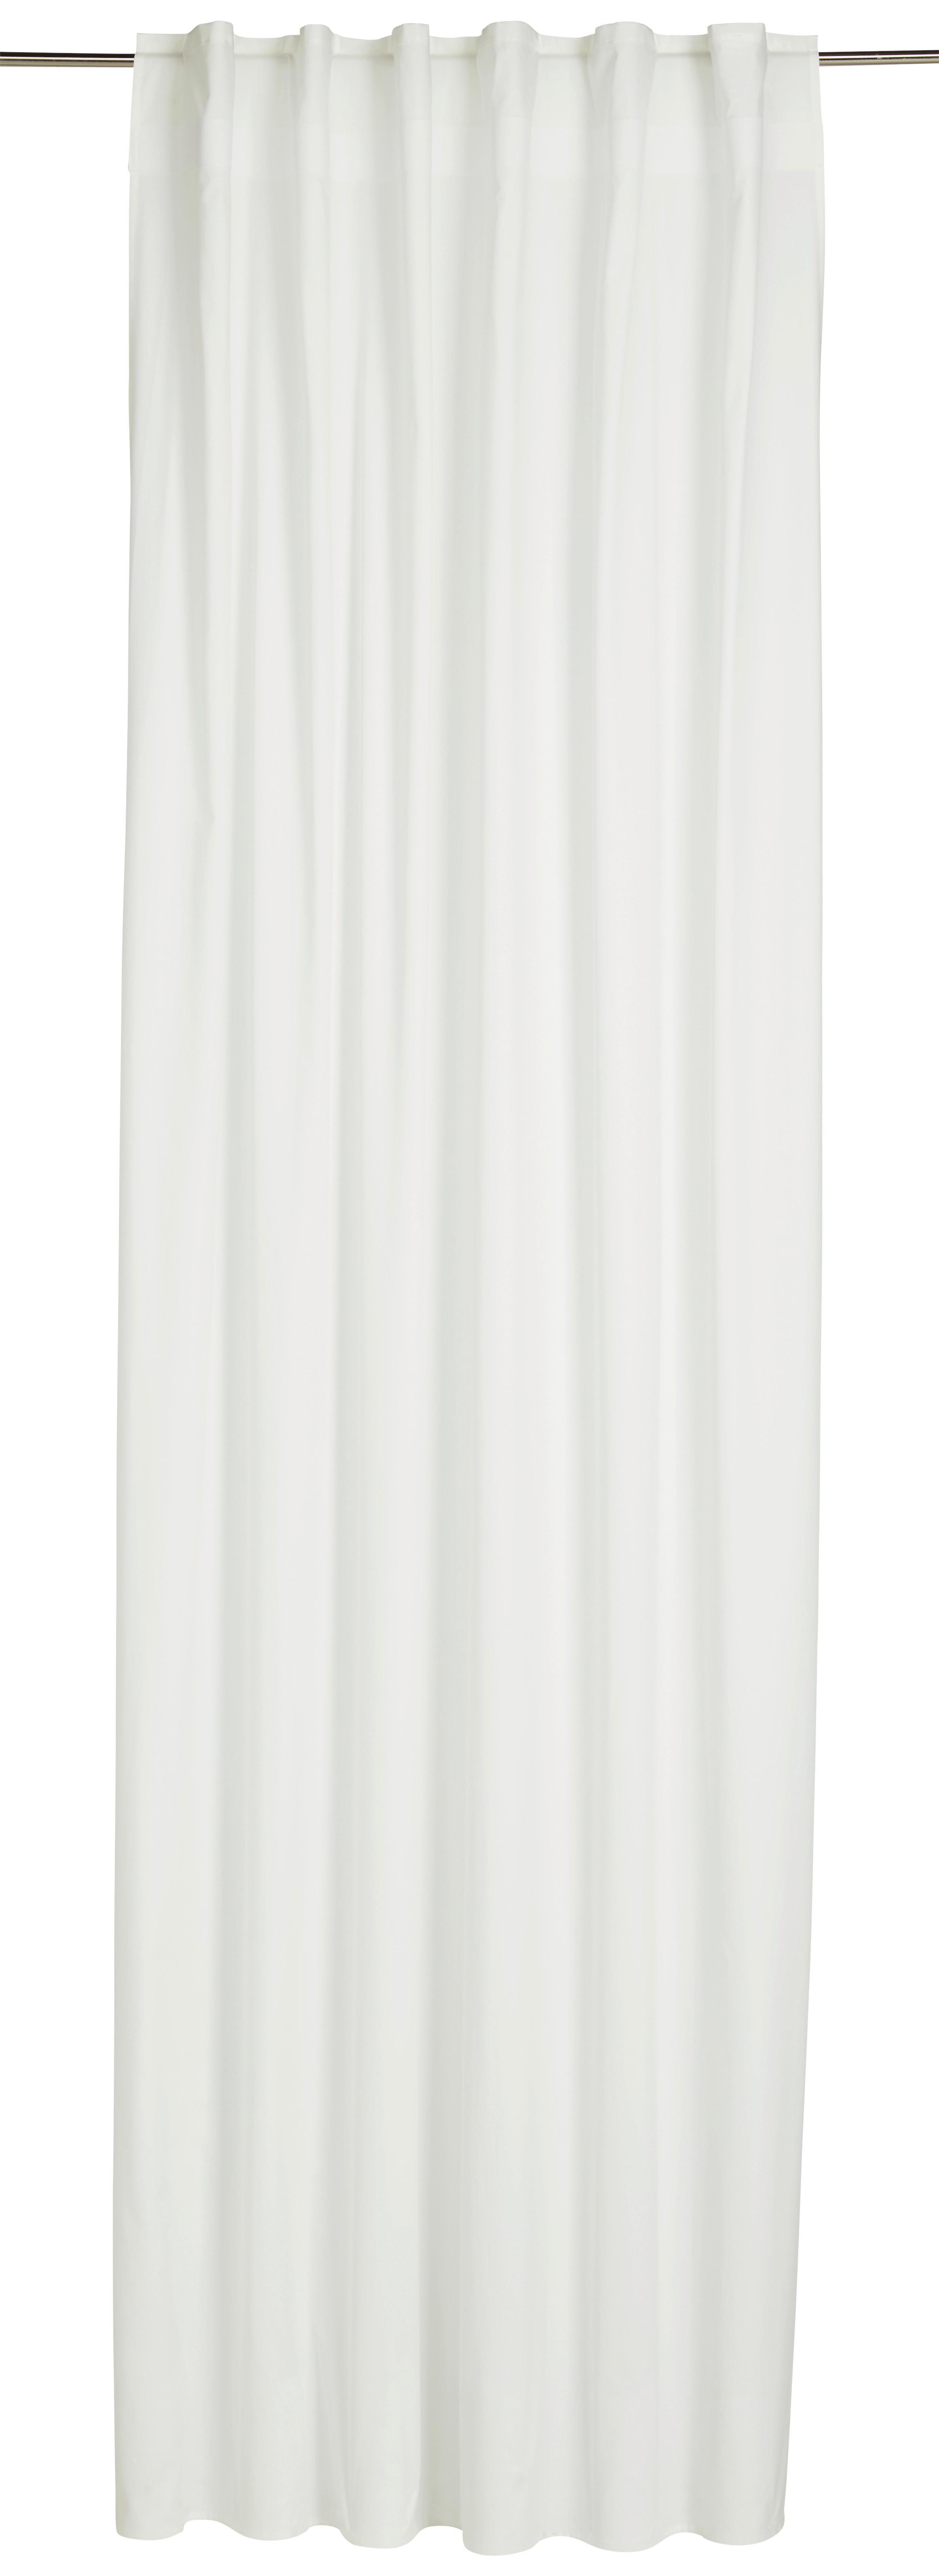 Zavjesa S Omčama Outdoor 300cm -Jub- - bijela, Modern, tekstil (140/300cm) - Modern Living